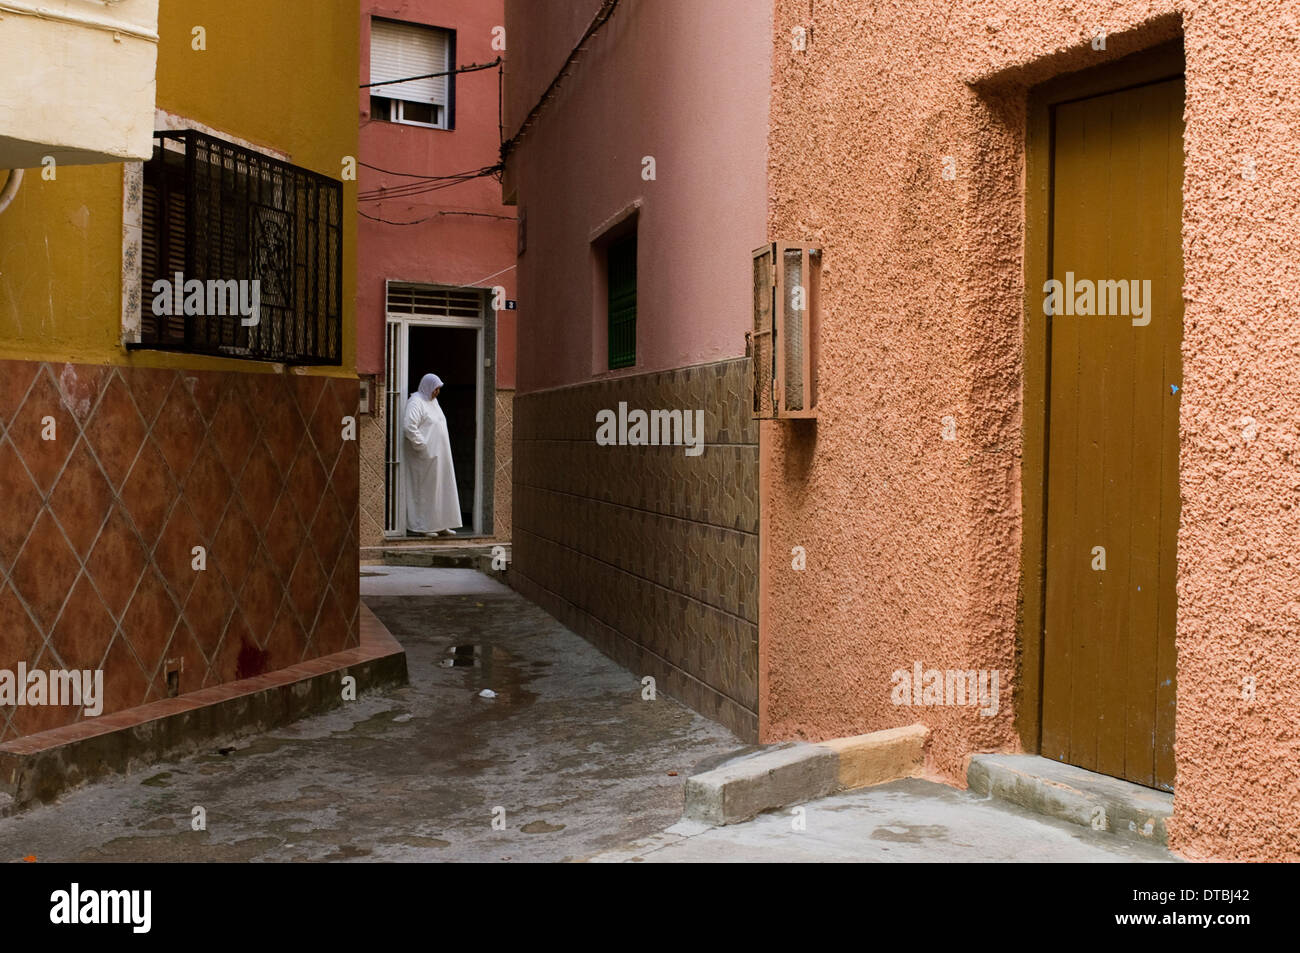 Islamic neighbourhood of Canada del Hidum in Melilla, Spain. poverty poor jobless suburb Stock Photo